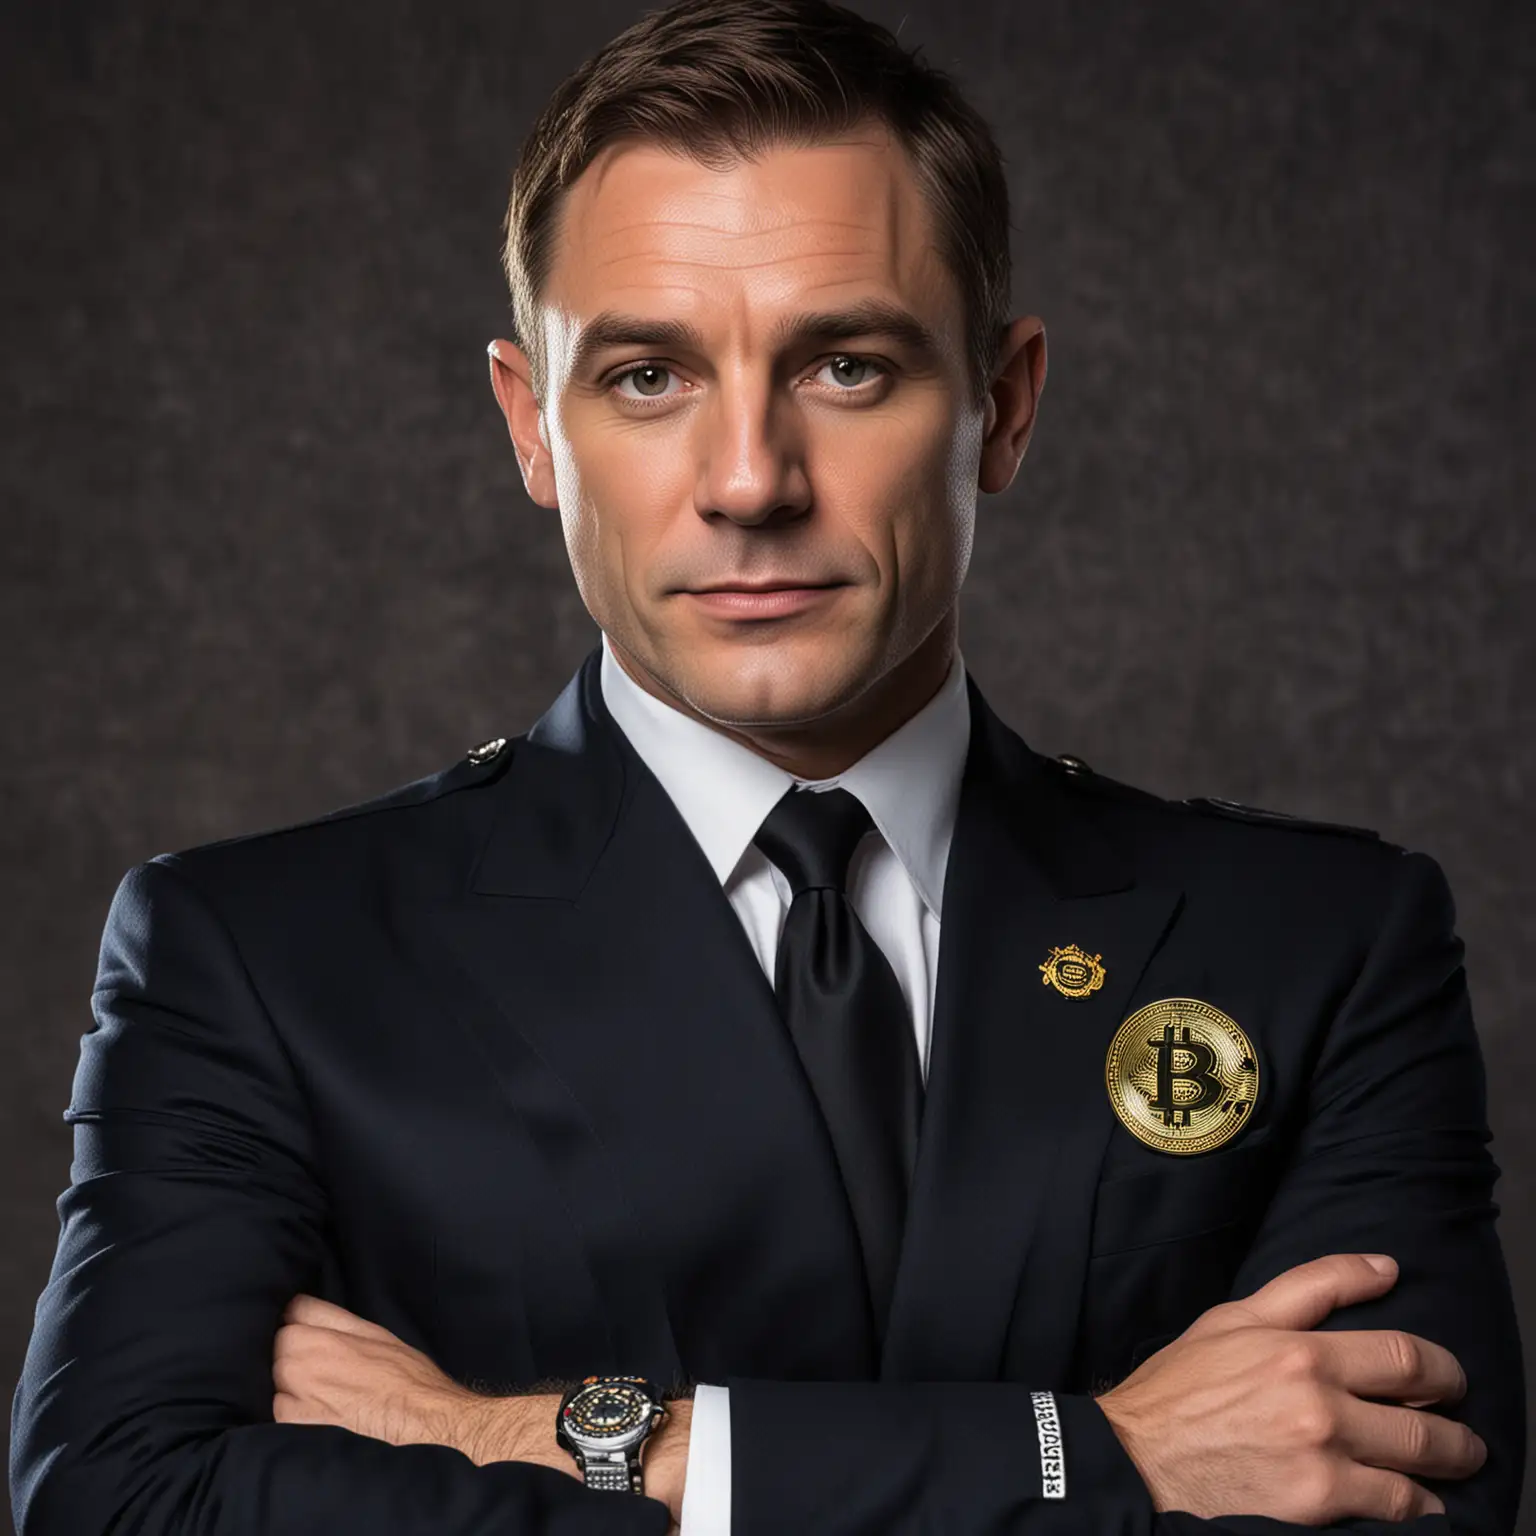 Bitcoin Bond Secret Agent with PoliceThemed Gear